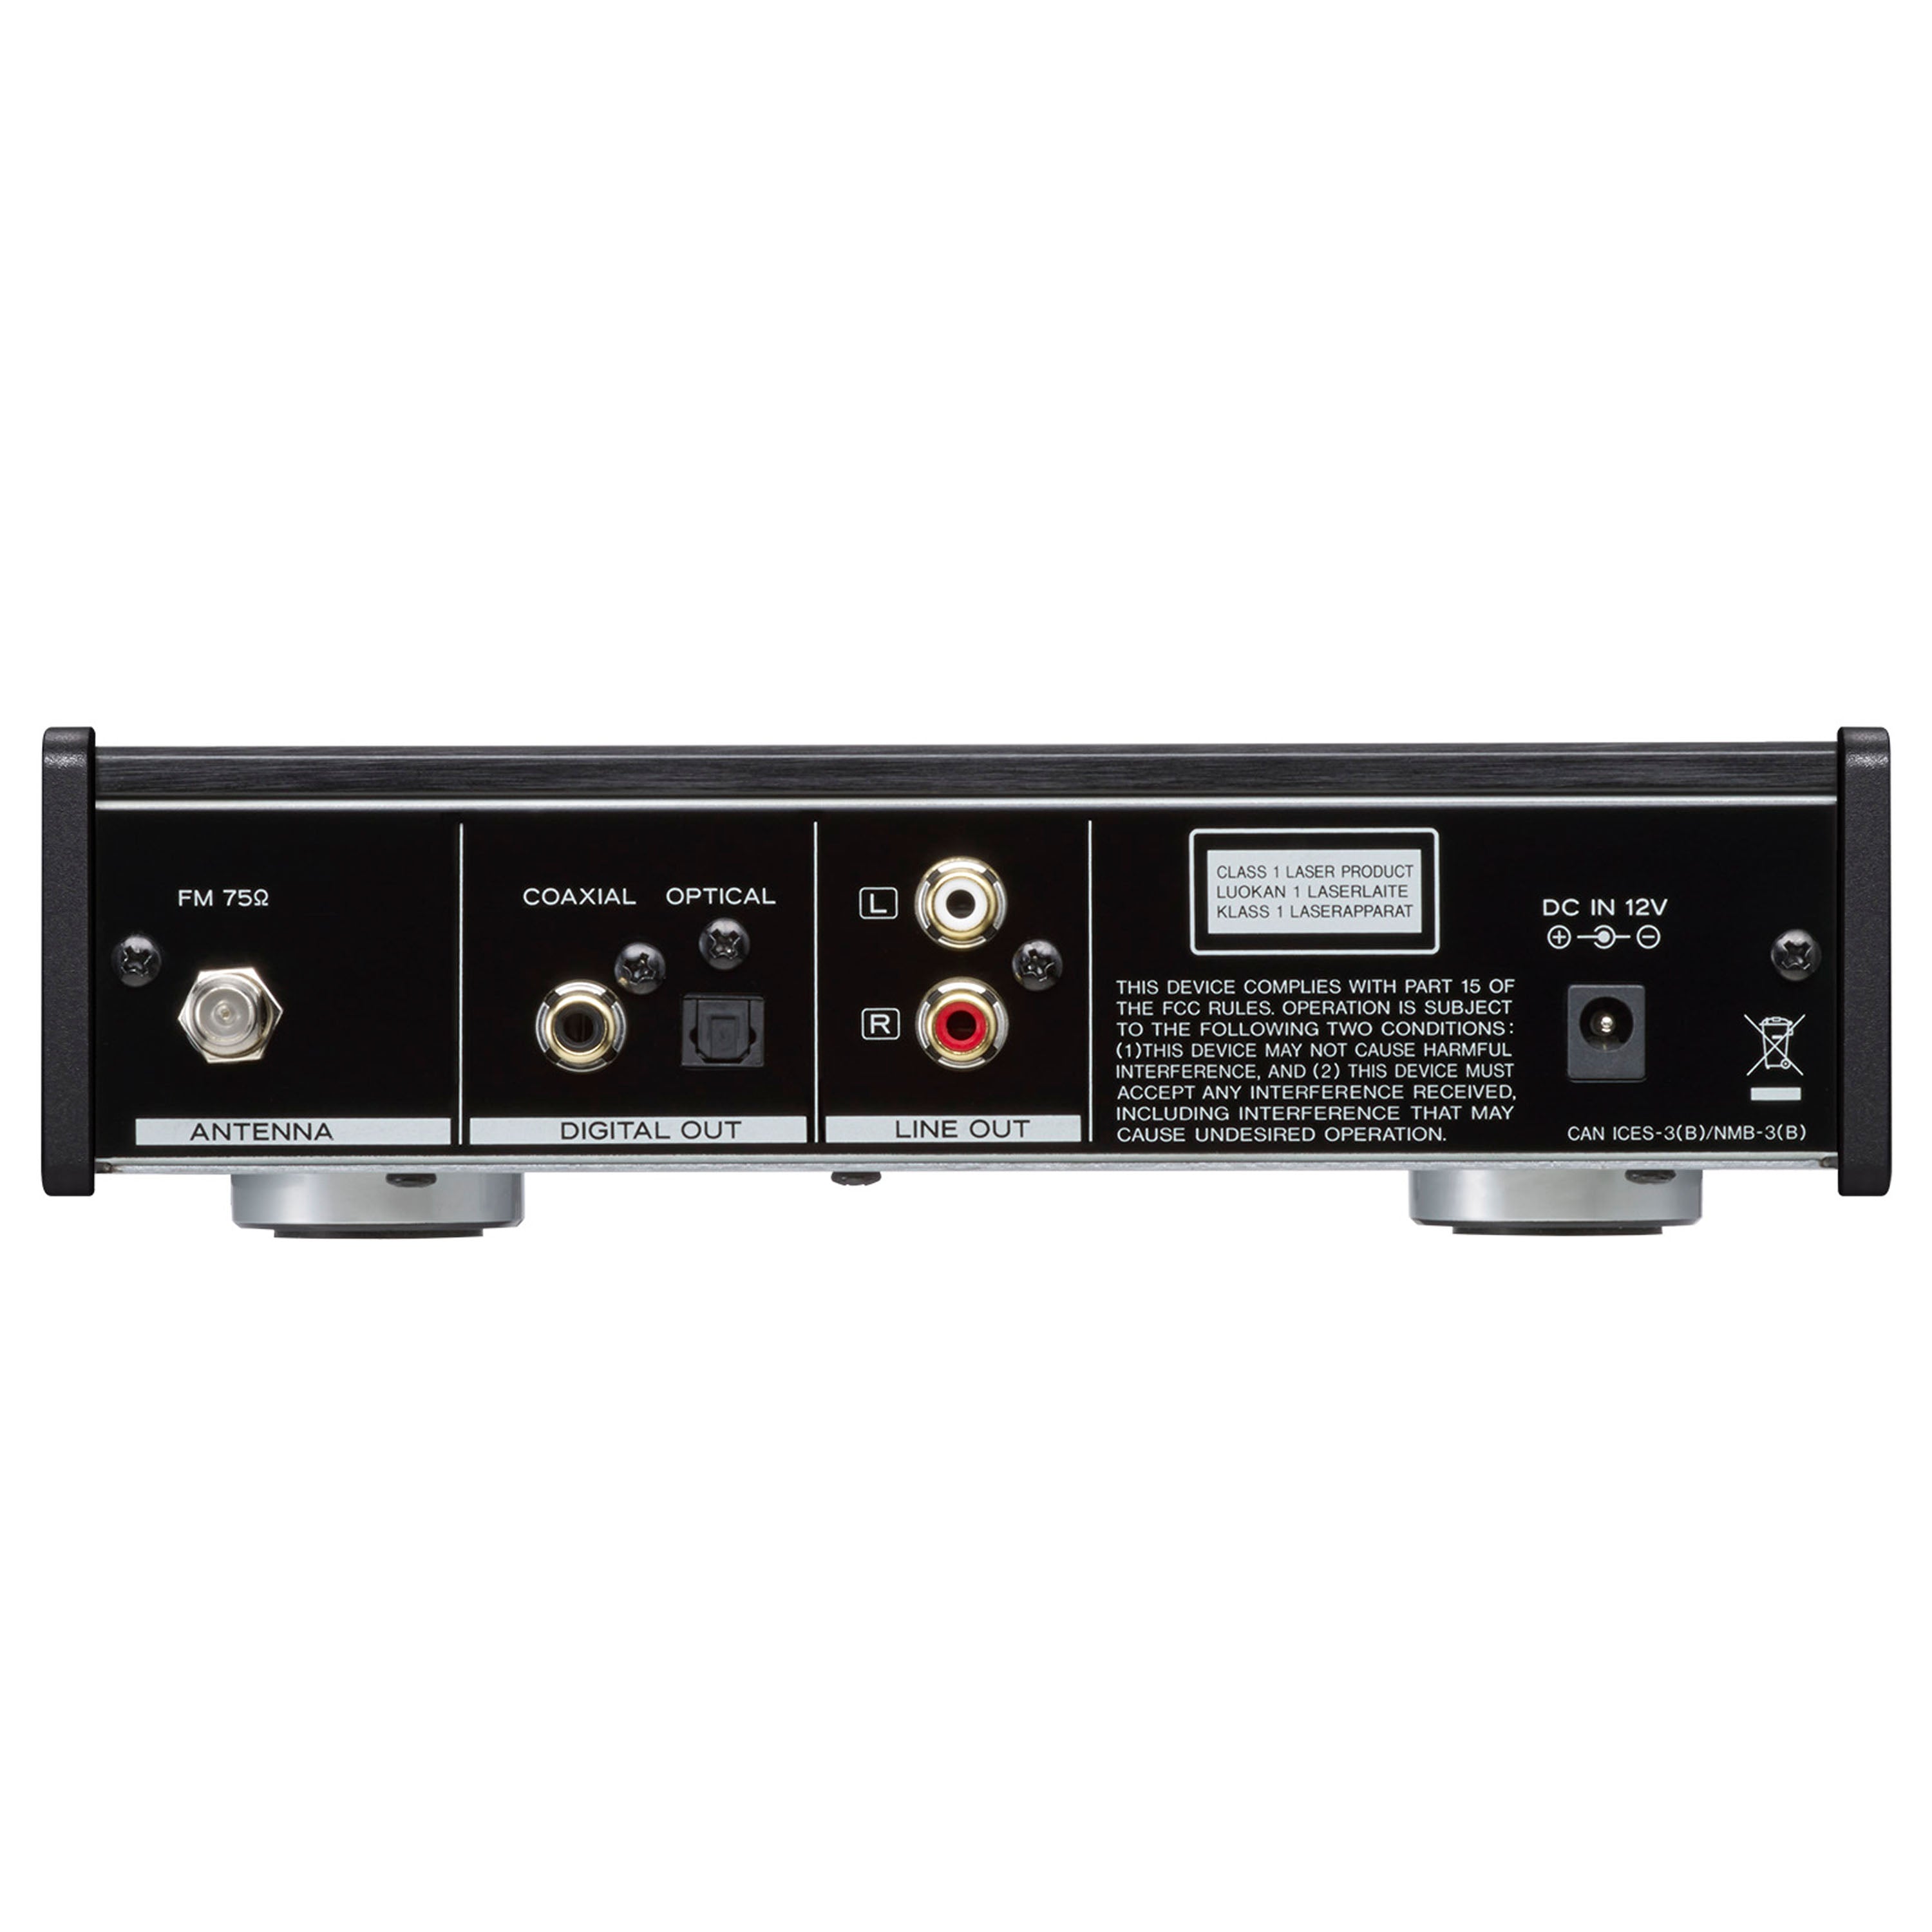 TEAC PD-301-X CD Player/FM Tuner (Black)